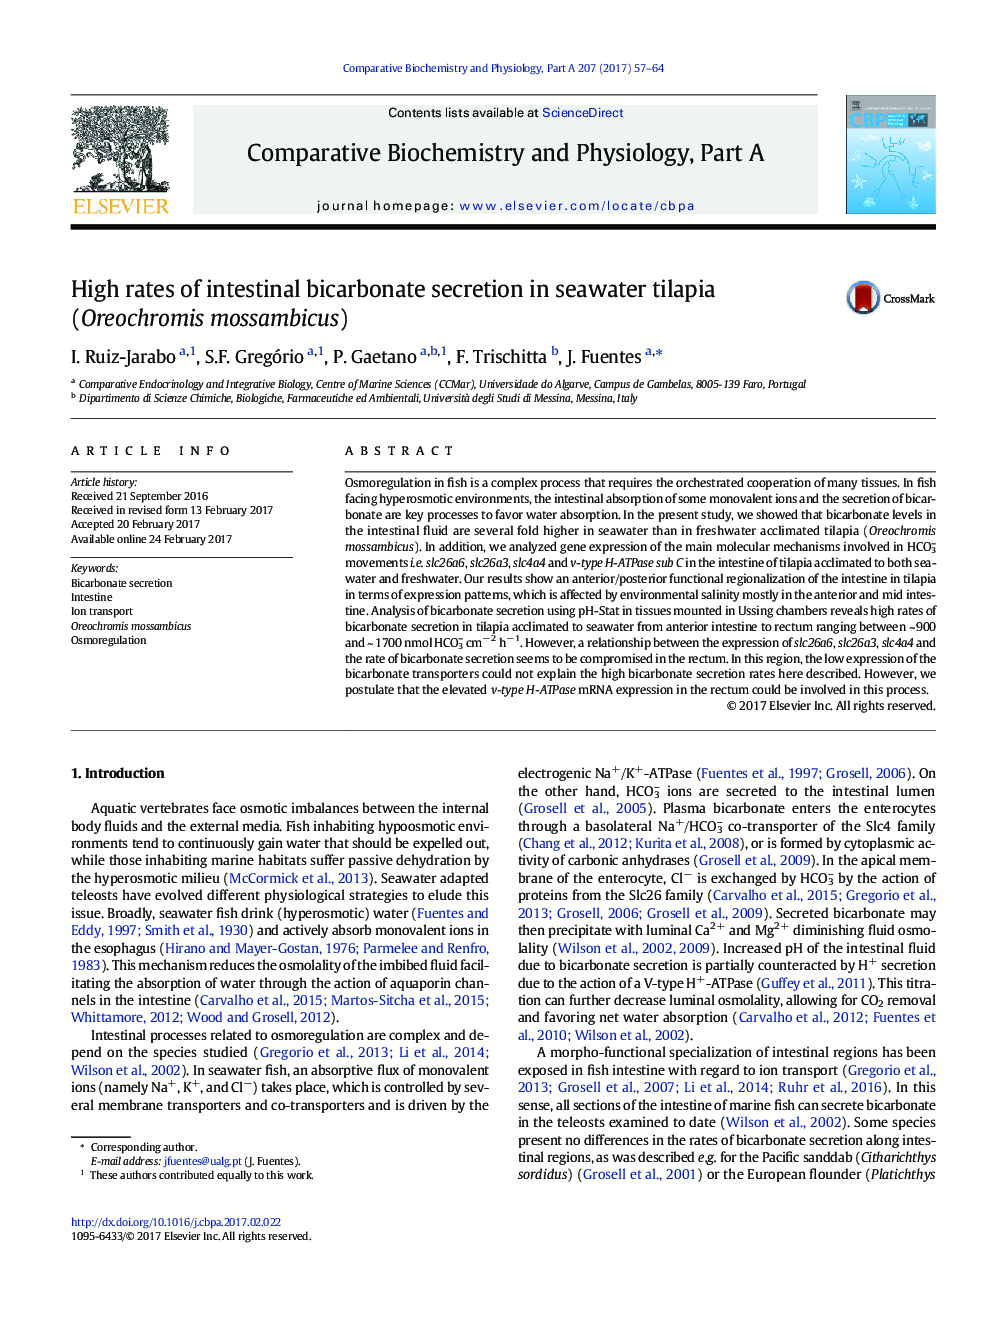 High rates of intestinal bicarbonate secretion in seawater tilapia (Oreochromis mossambicus)